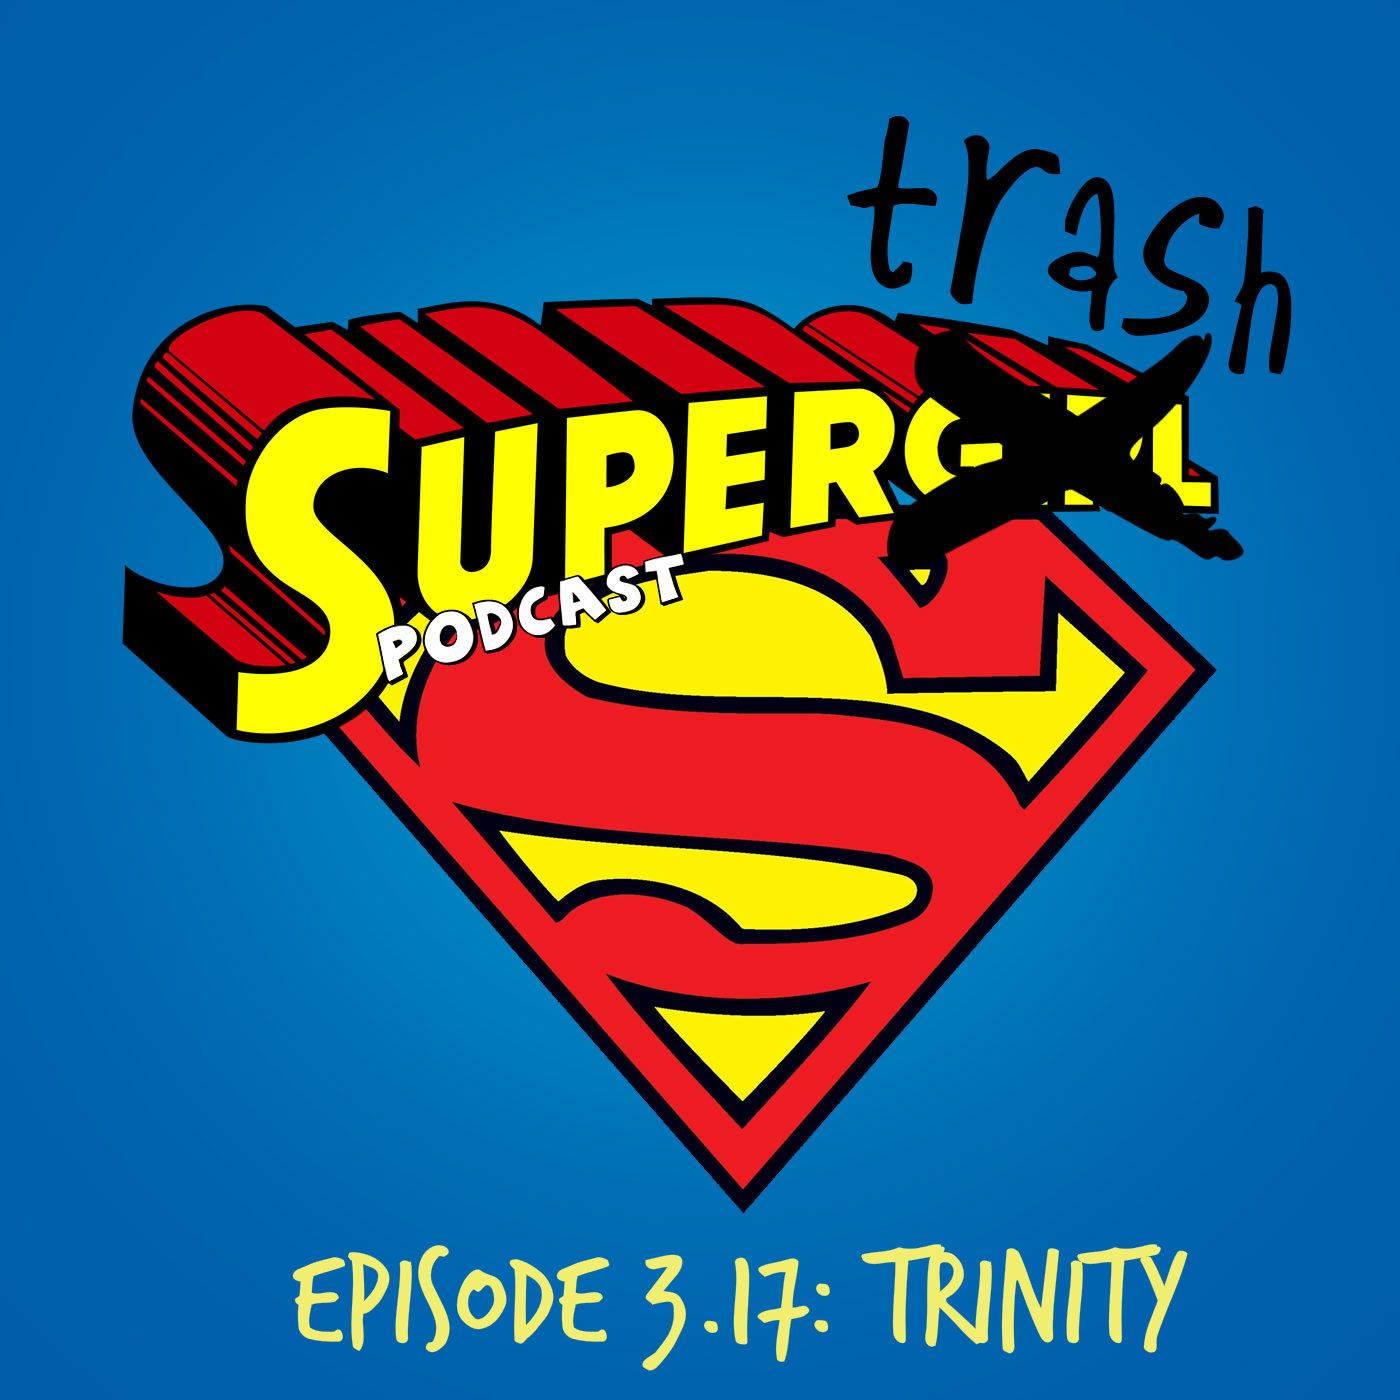 ’Supergirl’ Episode 3.17: ”Trinity”